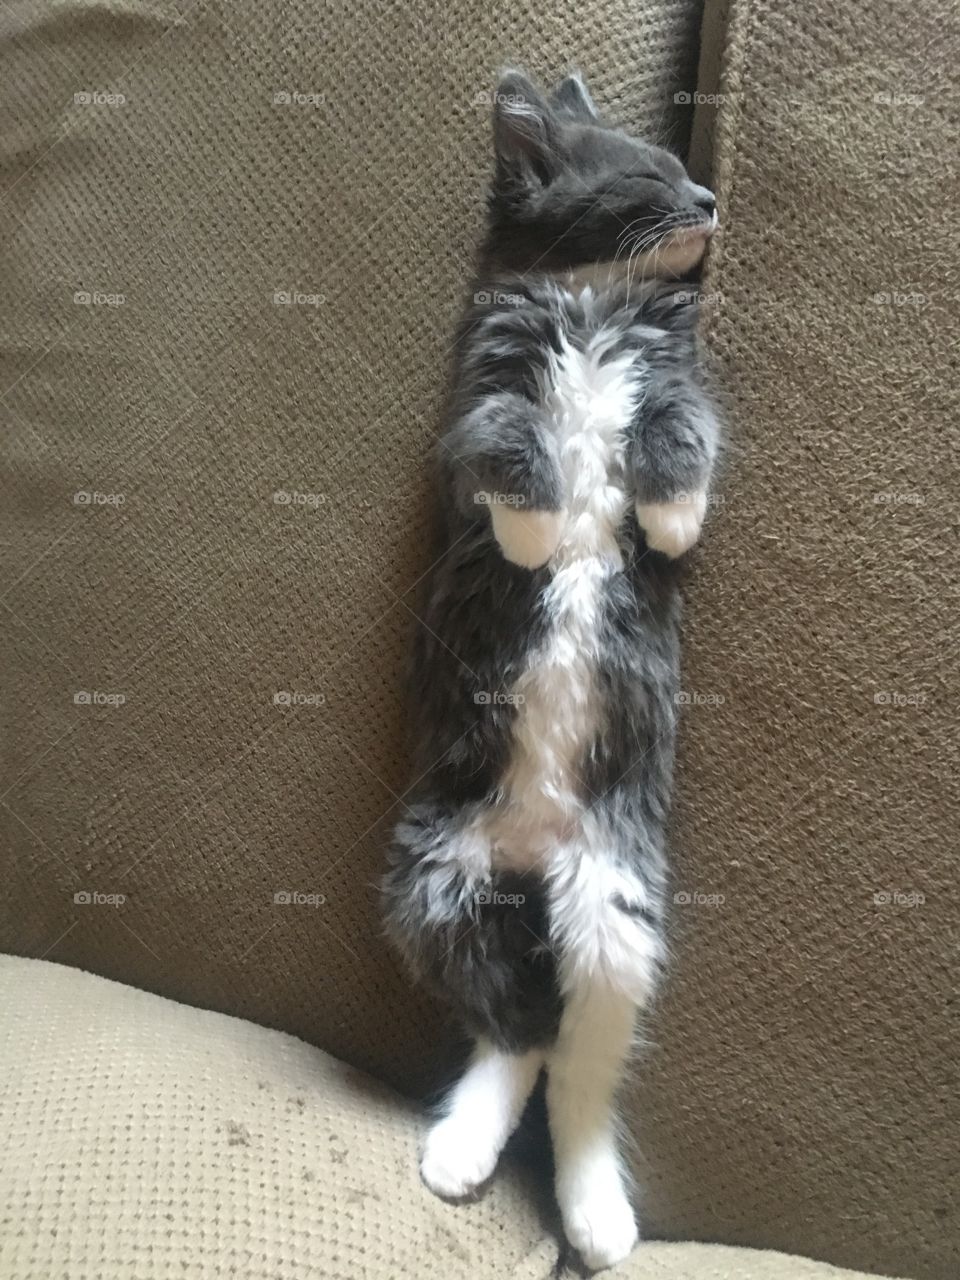 Little Gray Kitten shows her belly